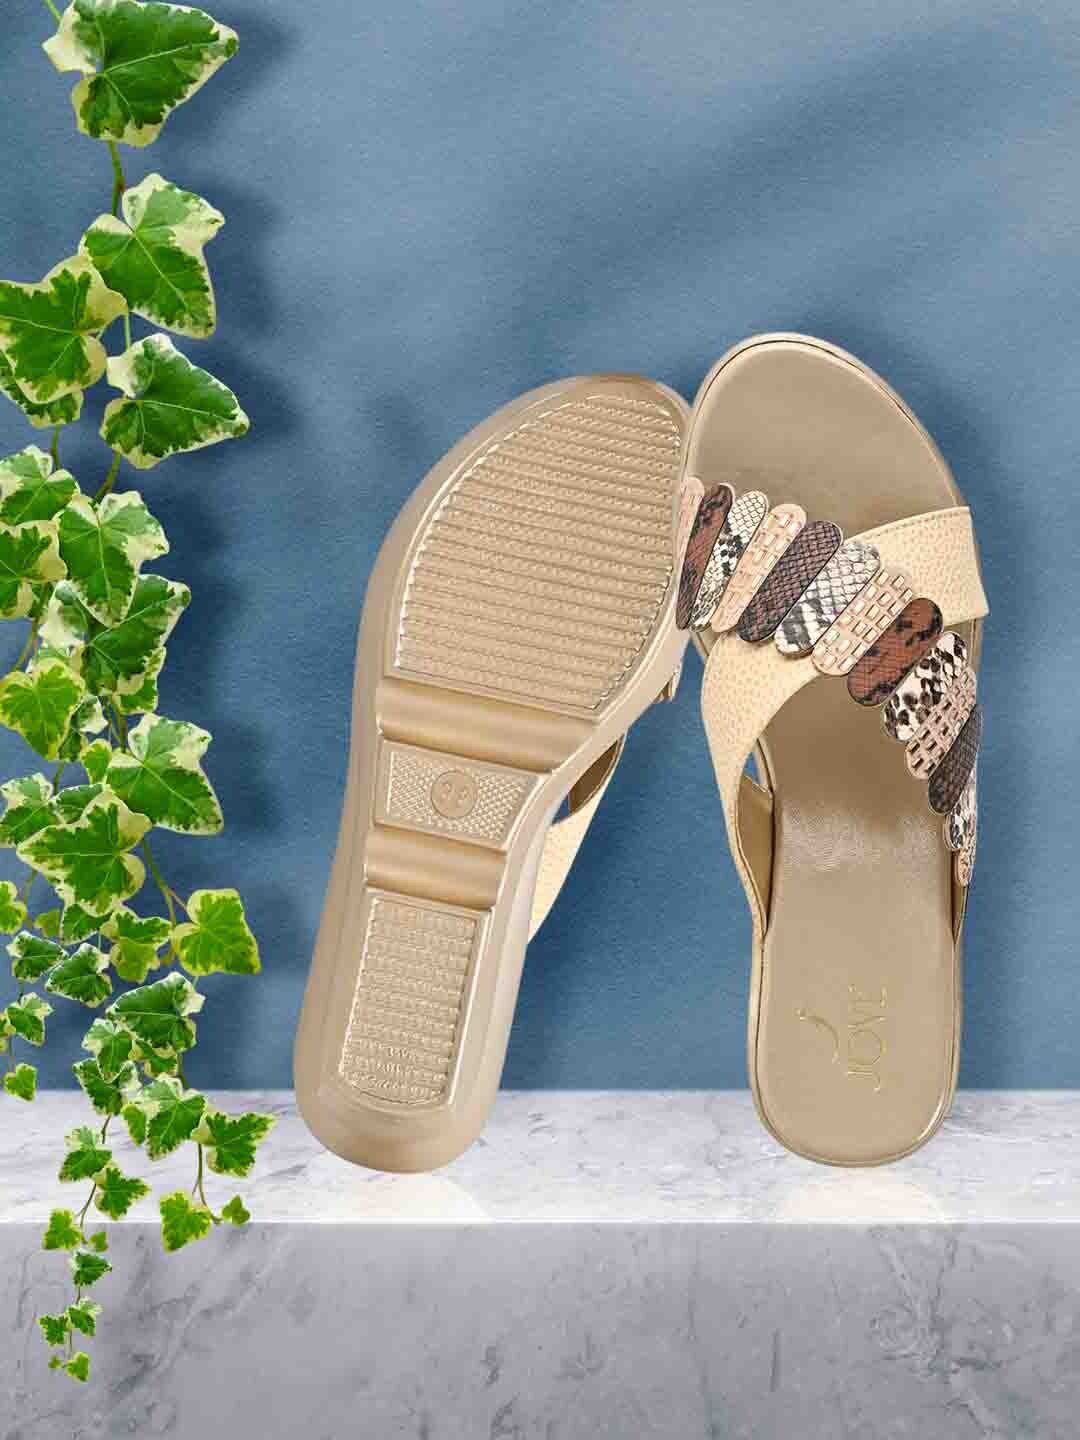 Jove Gold-Toned Printed Flatform Sandals Price in India